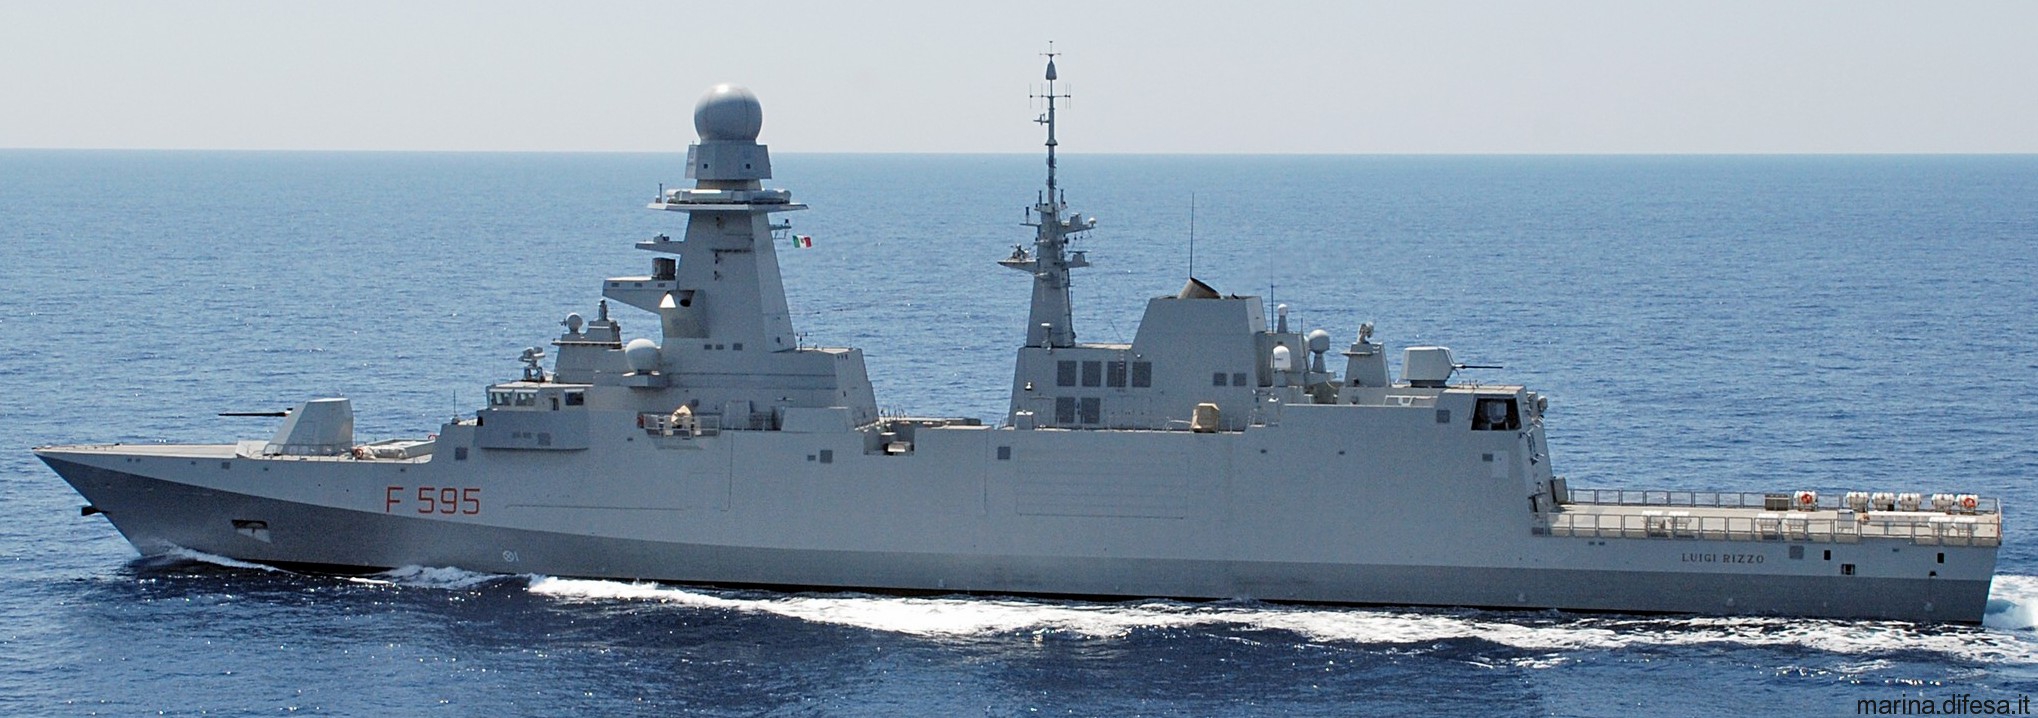 f-595 luigi rizzo its nave bergamini fremm class guided missile frigate italian navy marina militare 25